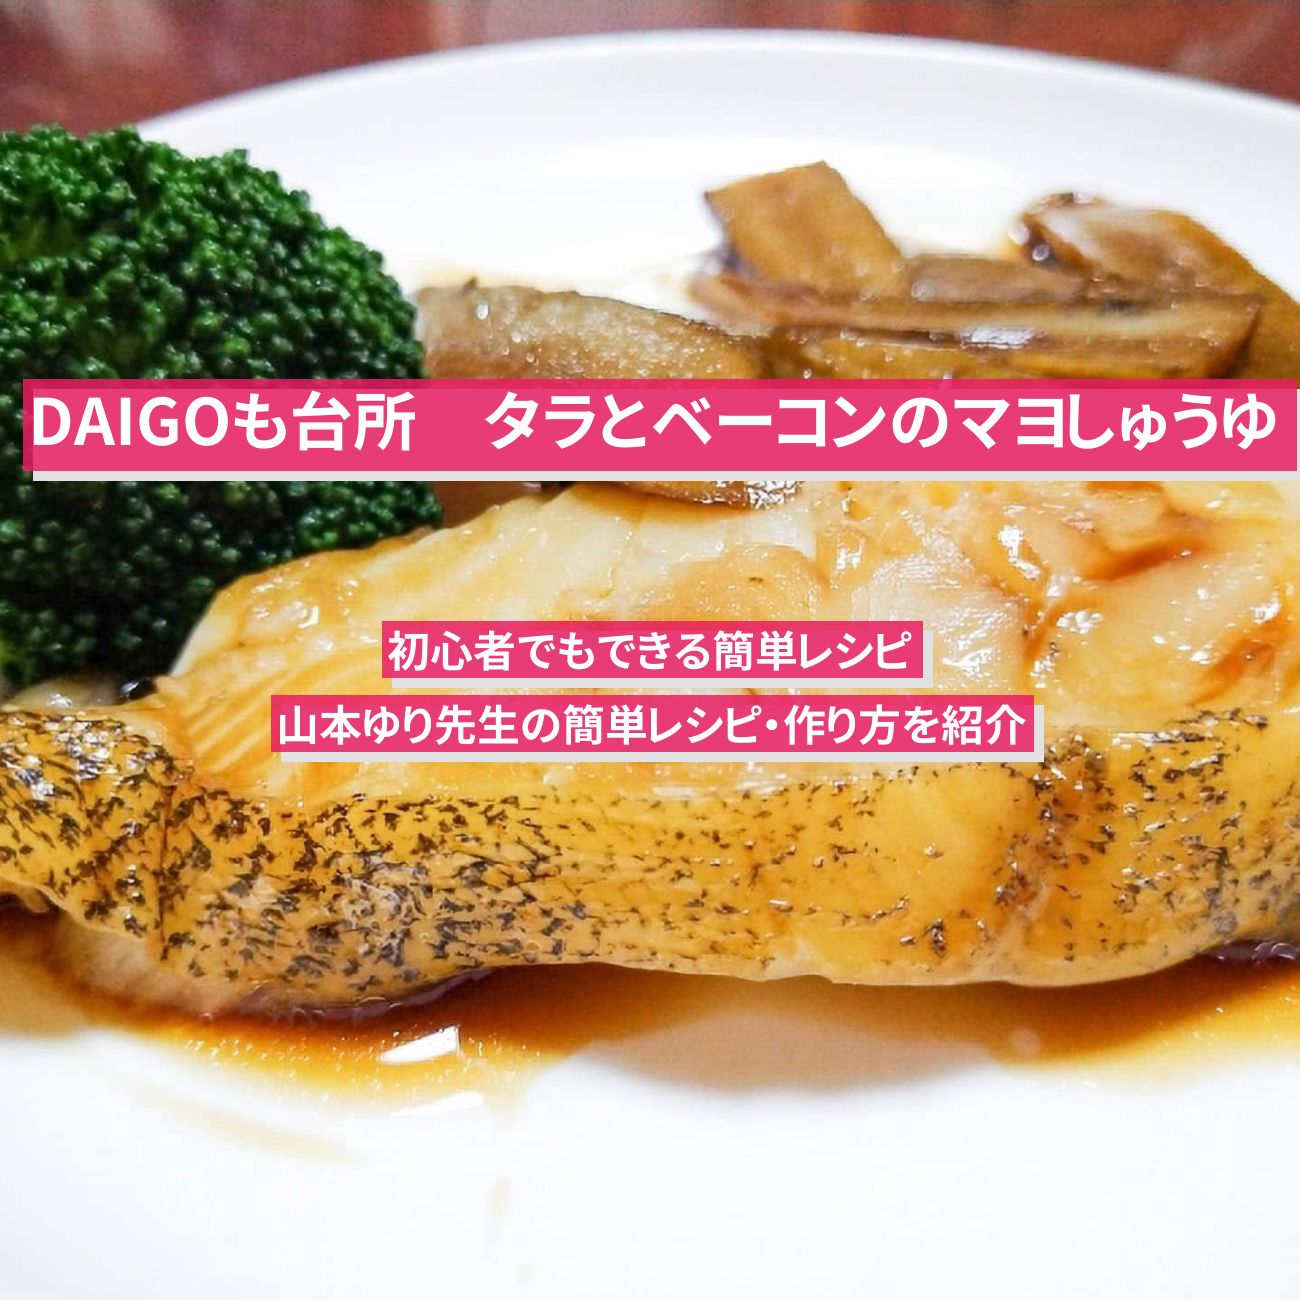 【DAIGOも台所】『タラとベーコンのマヨしゅうゆ』山本ゆり先生のレシピ・作り方を紹介